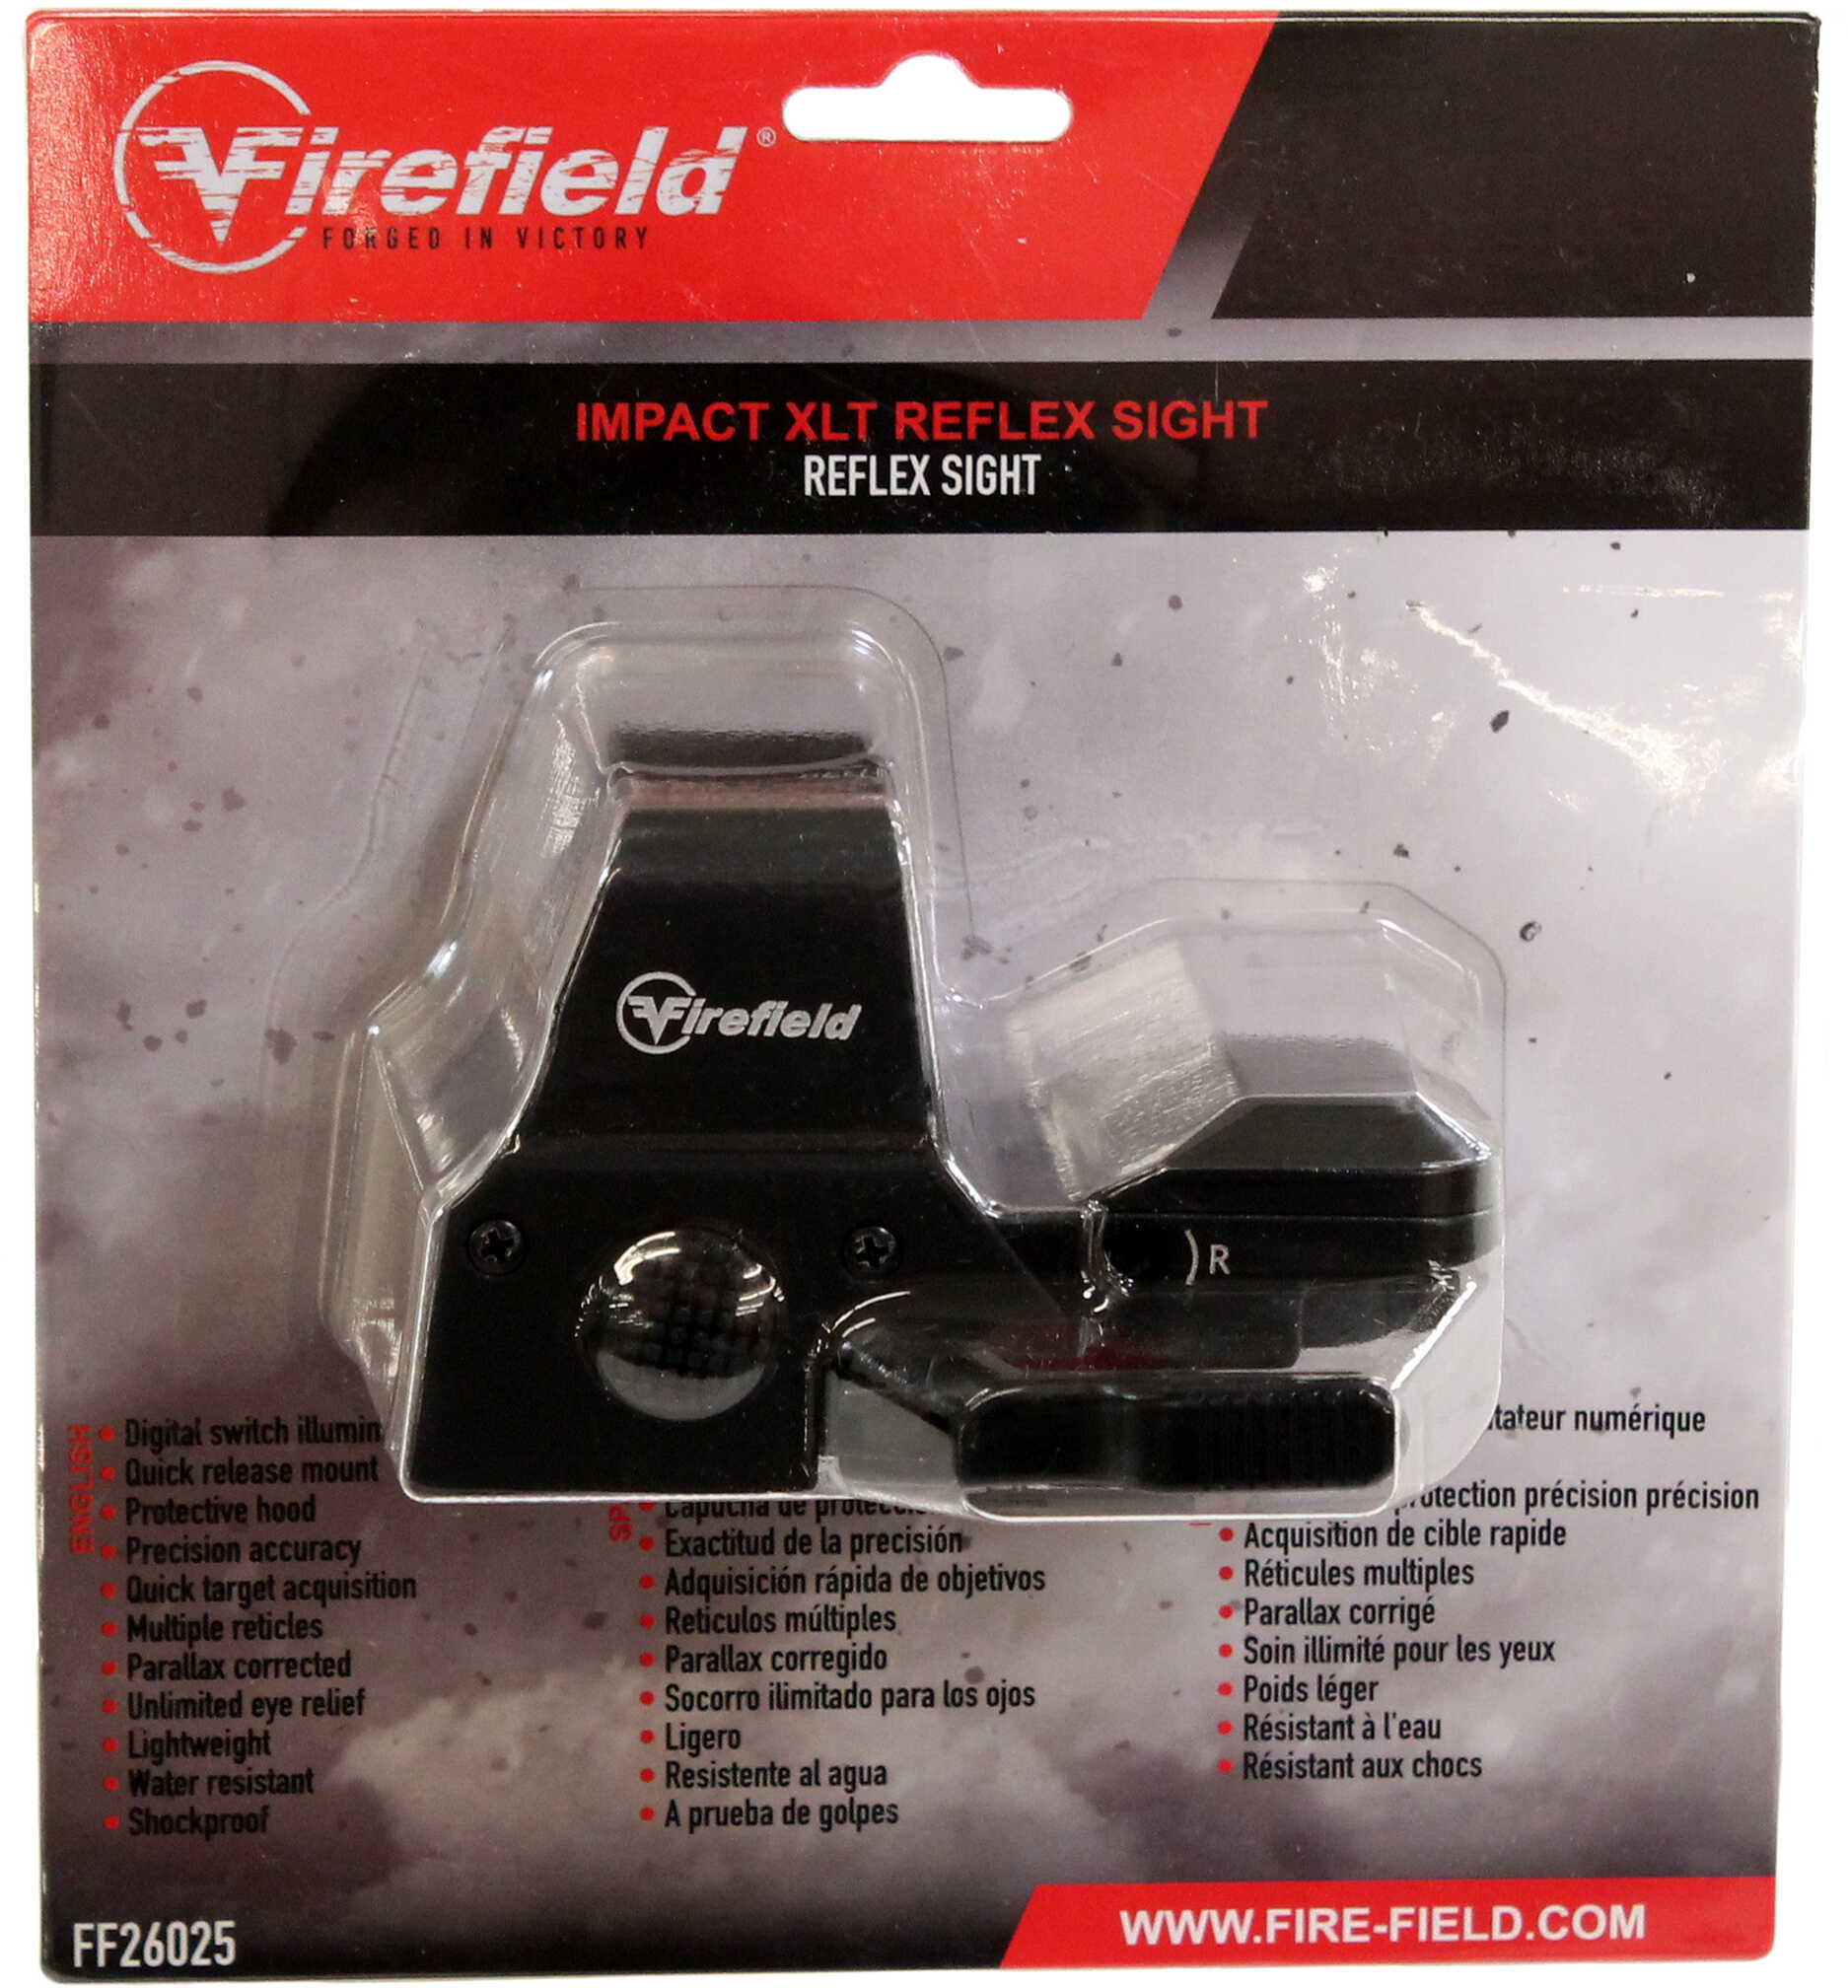 Impact XLT Reflex Sight Md: FF26025 Firefield